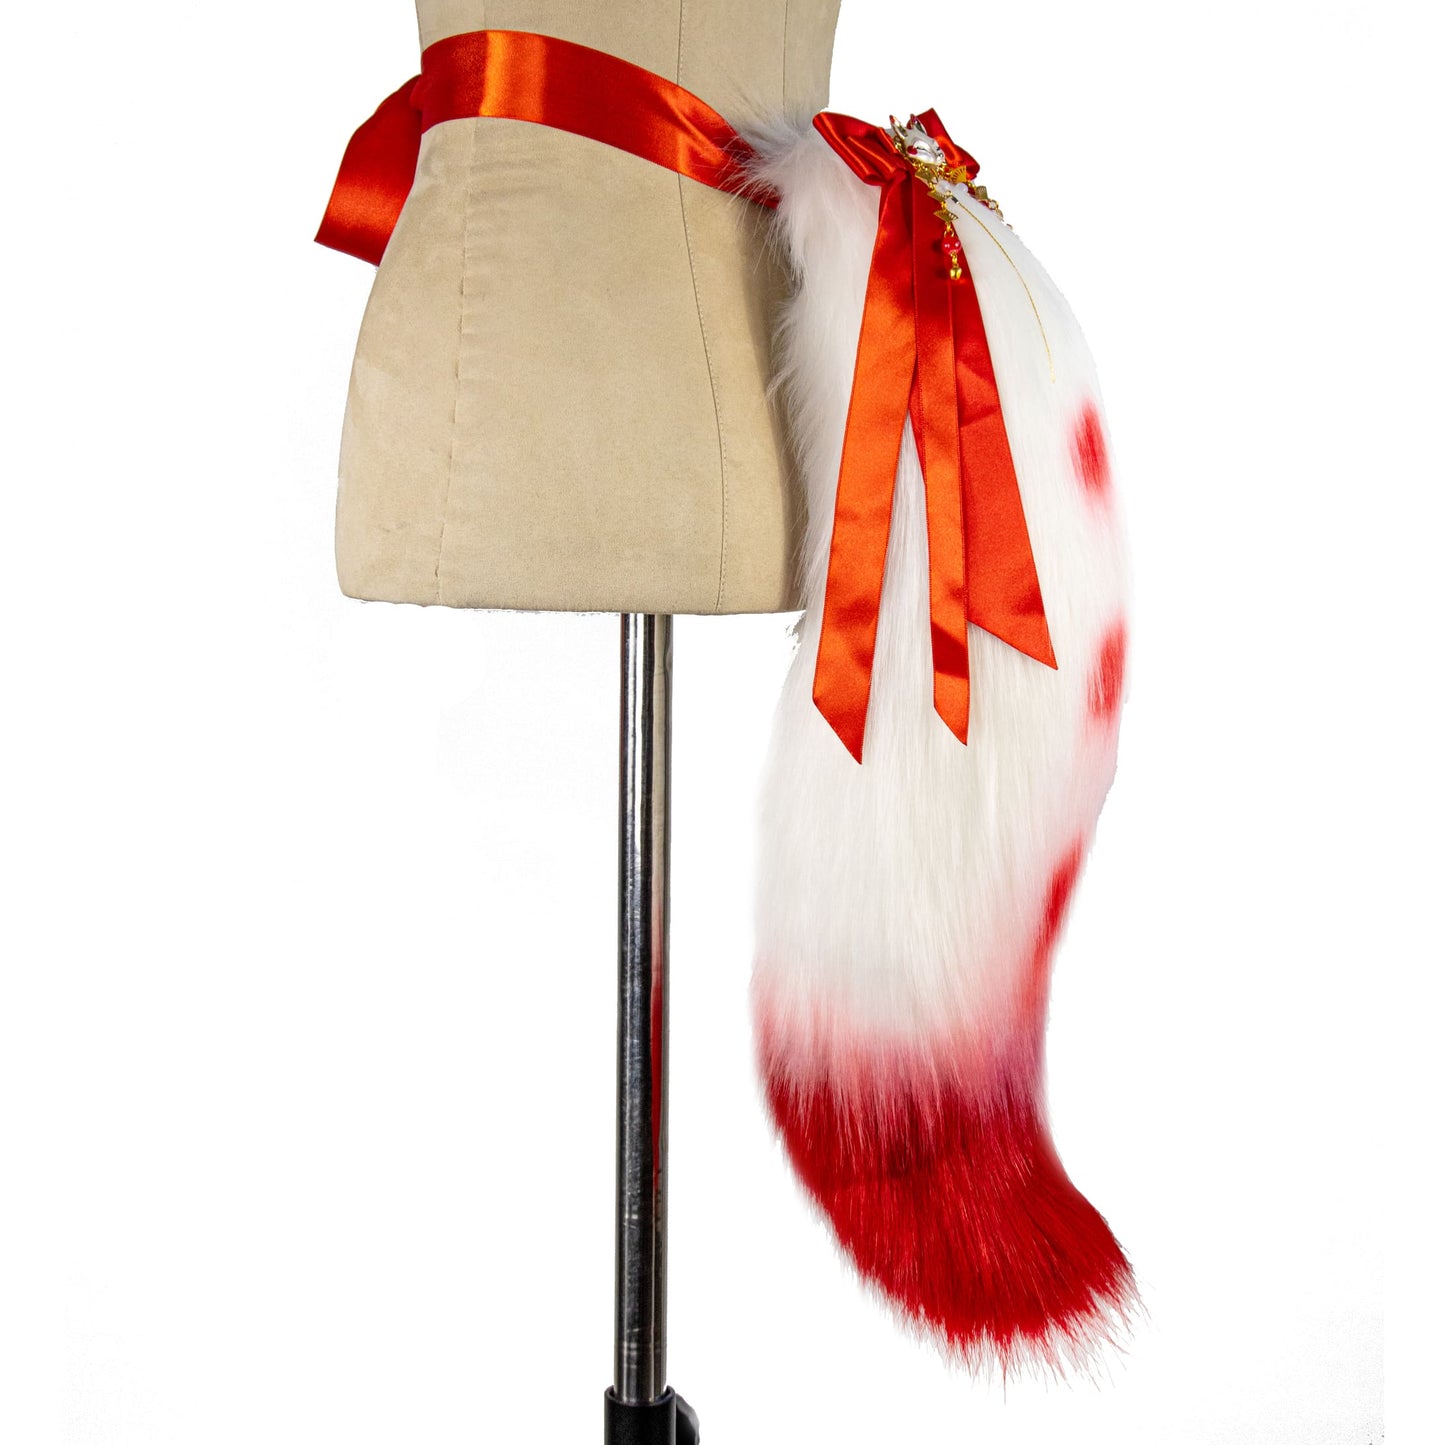 Kitsune Ears and Tail Set